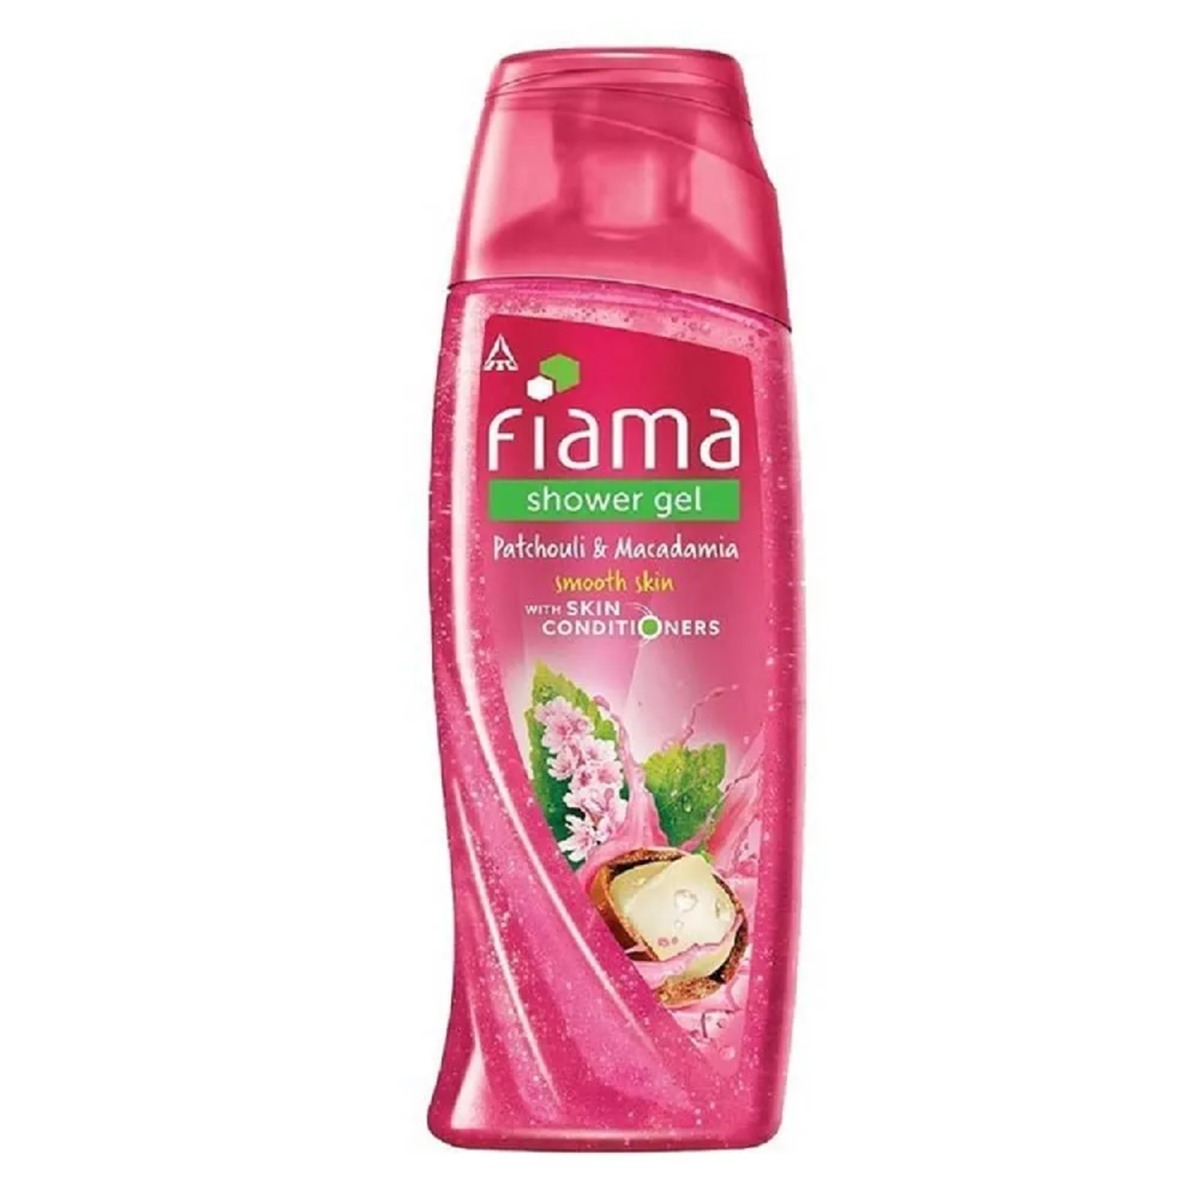 Fiama Shower Gel Patchouli & Macadamia, Body Wash With Skin Conditioners For Soft Glowing Skin, 250ml